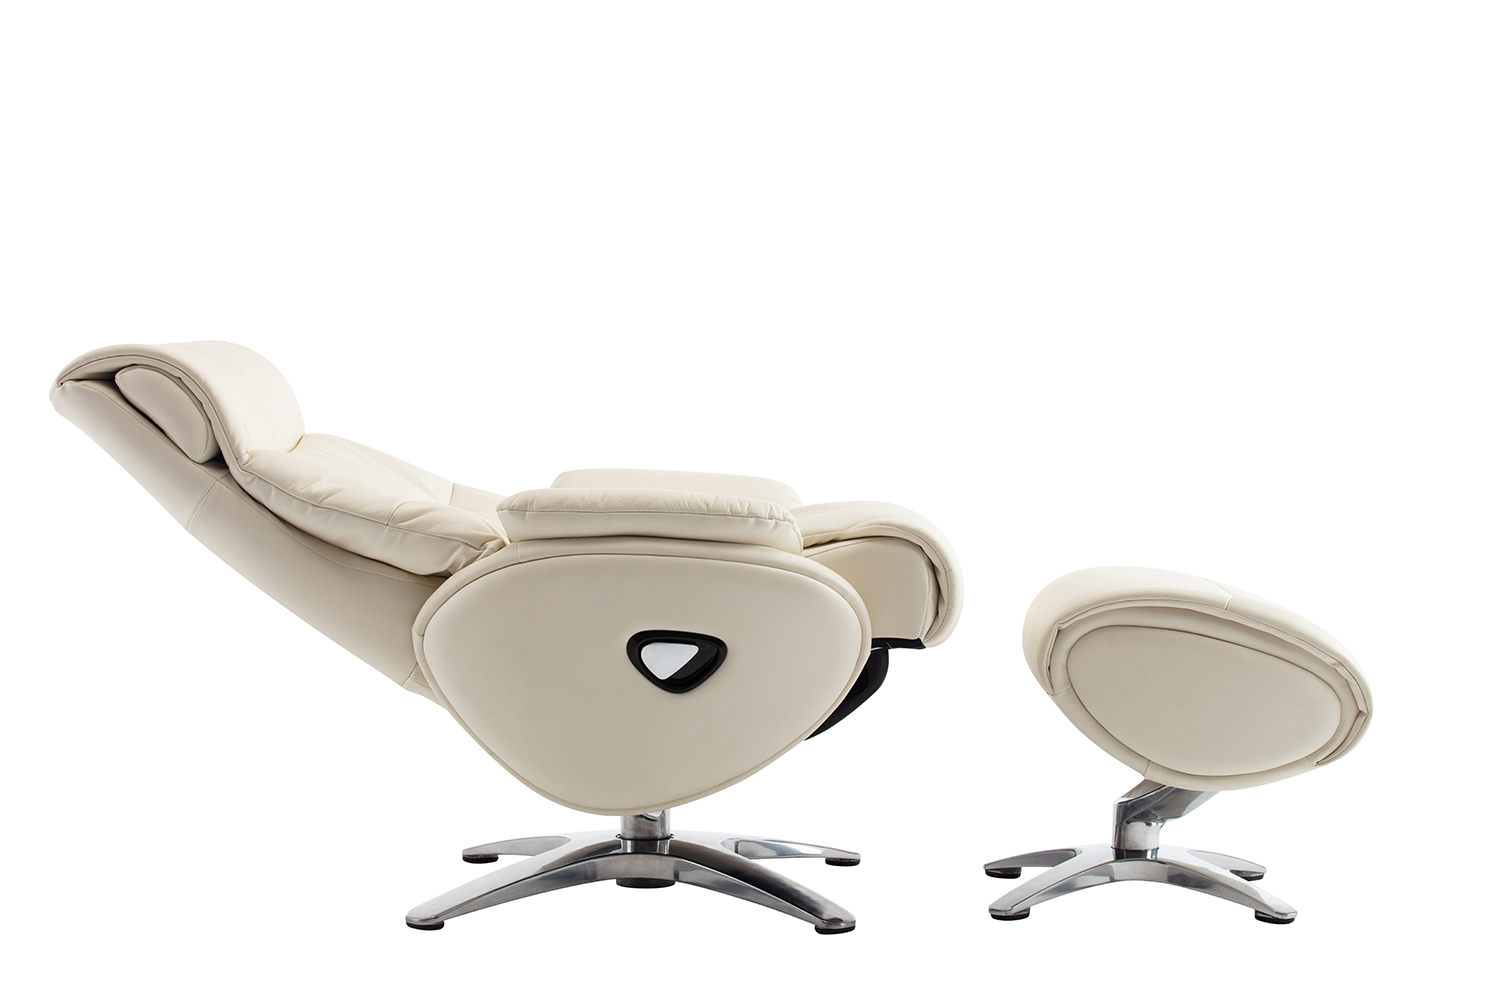 Barcalounger Adler Pedestal Recliner Chair and Ottoman - Capri White/Leather match